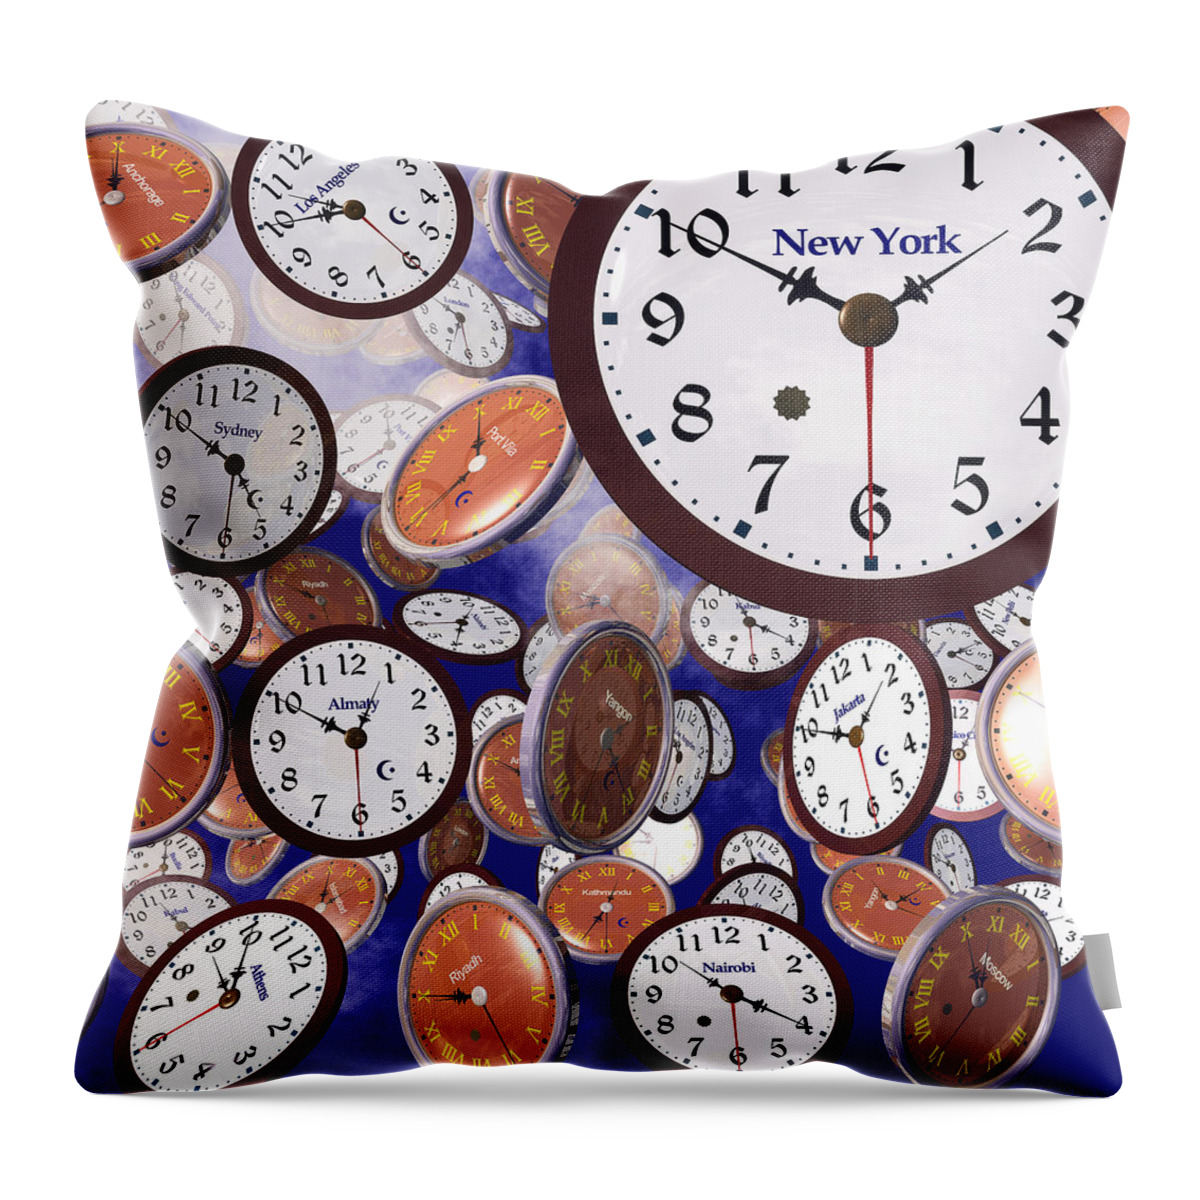 Clocks Throw Pillow featuring the digital art It's Raining Clocks - New York by Nicola Nobile